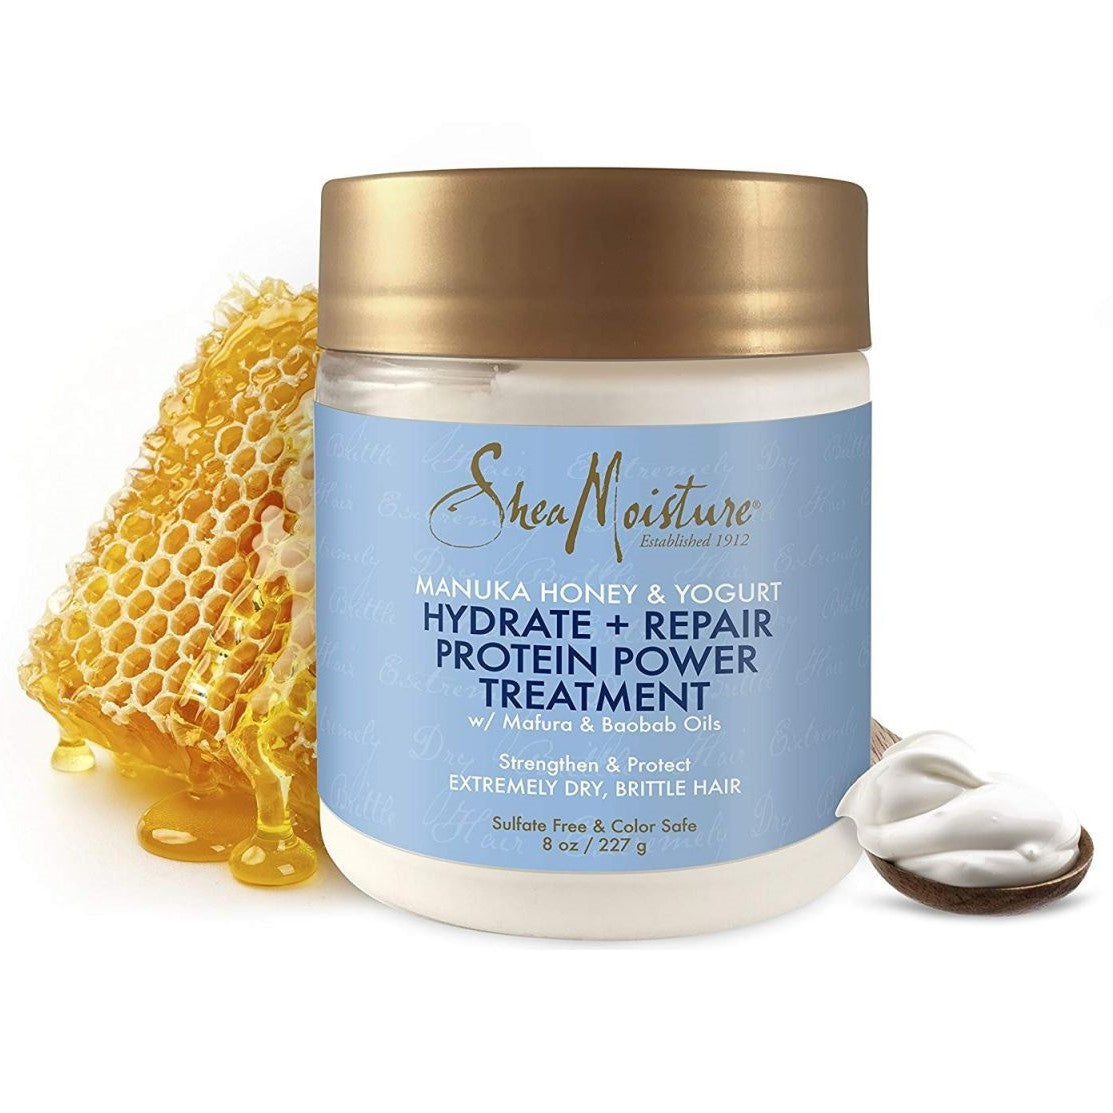 Shea Moisture Manuka Honey & Yogurt Hydrate + Repair Protein-Trong Treatment 227GR